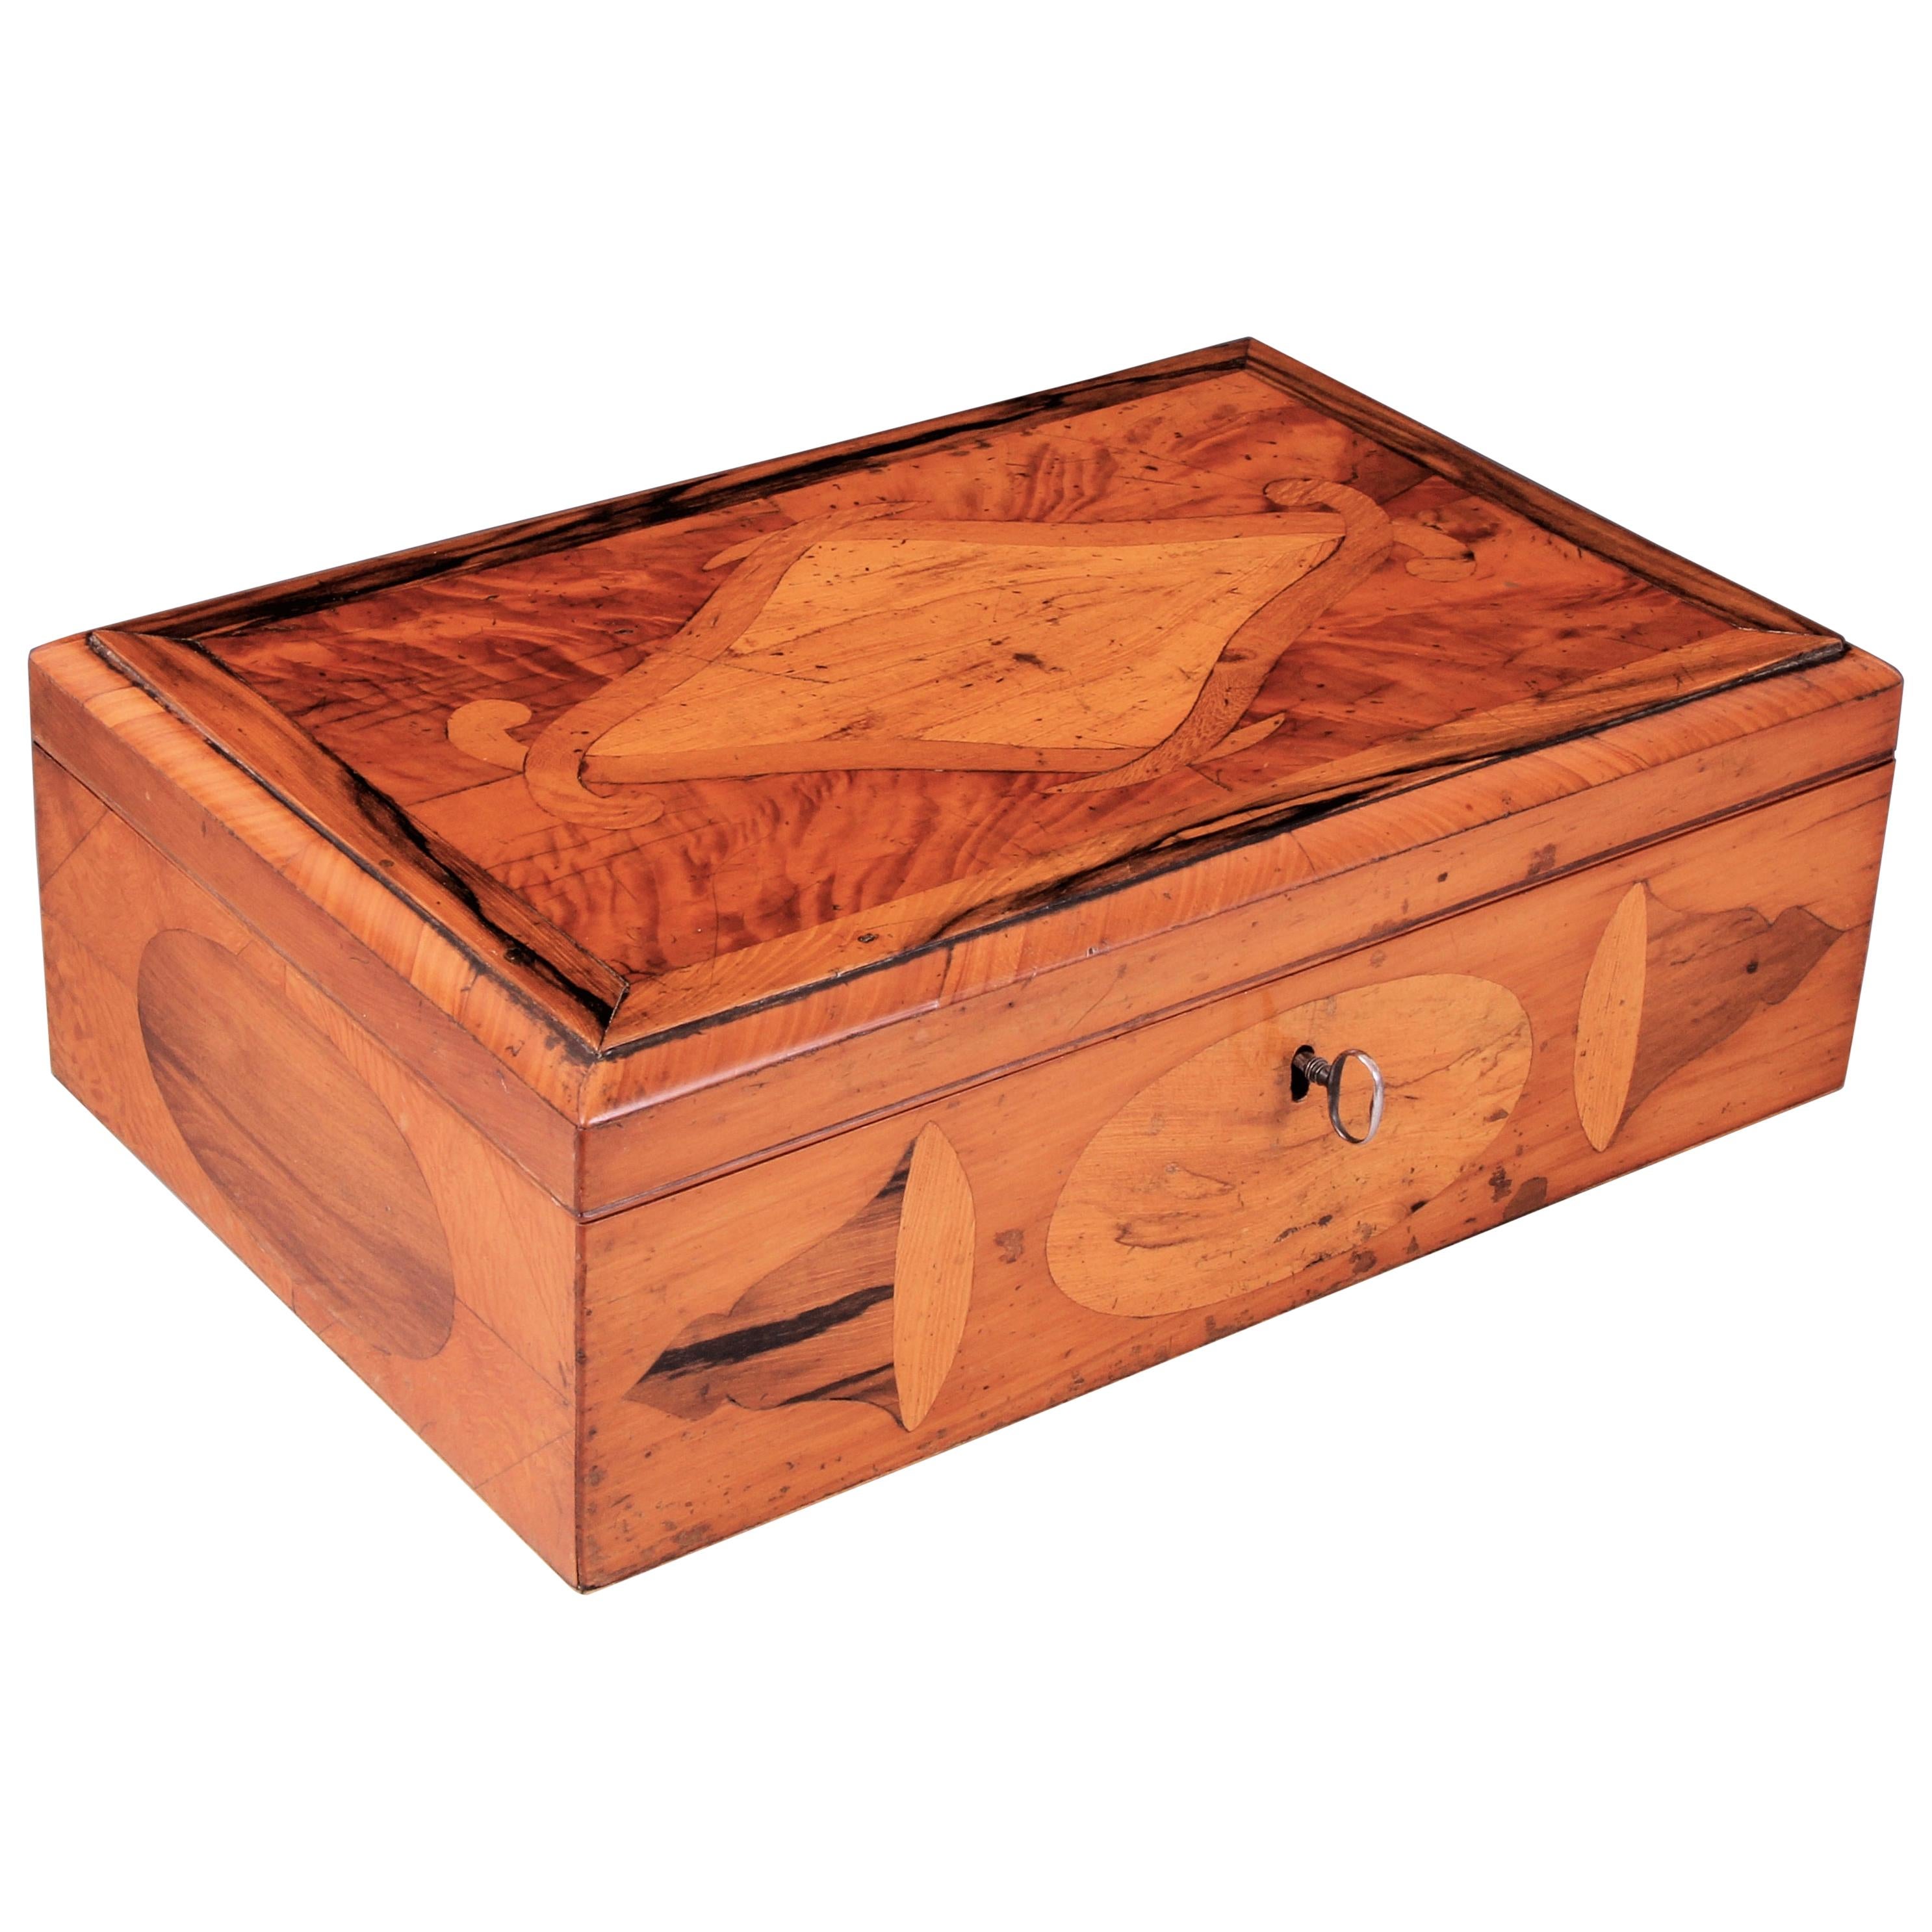 Early 19th Century New Zealand Specimen Wood Box